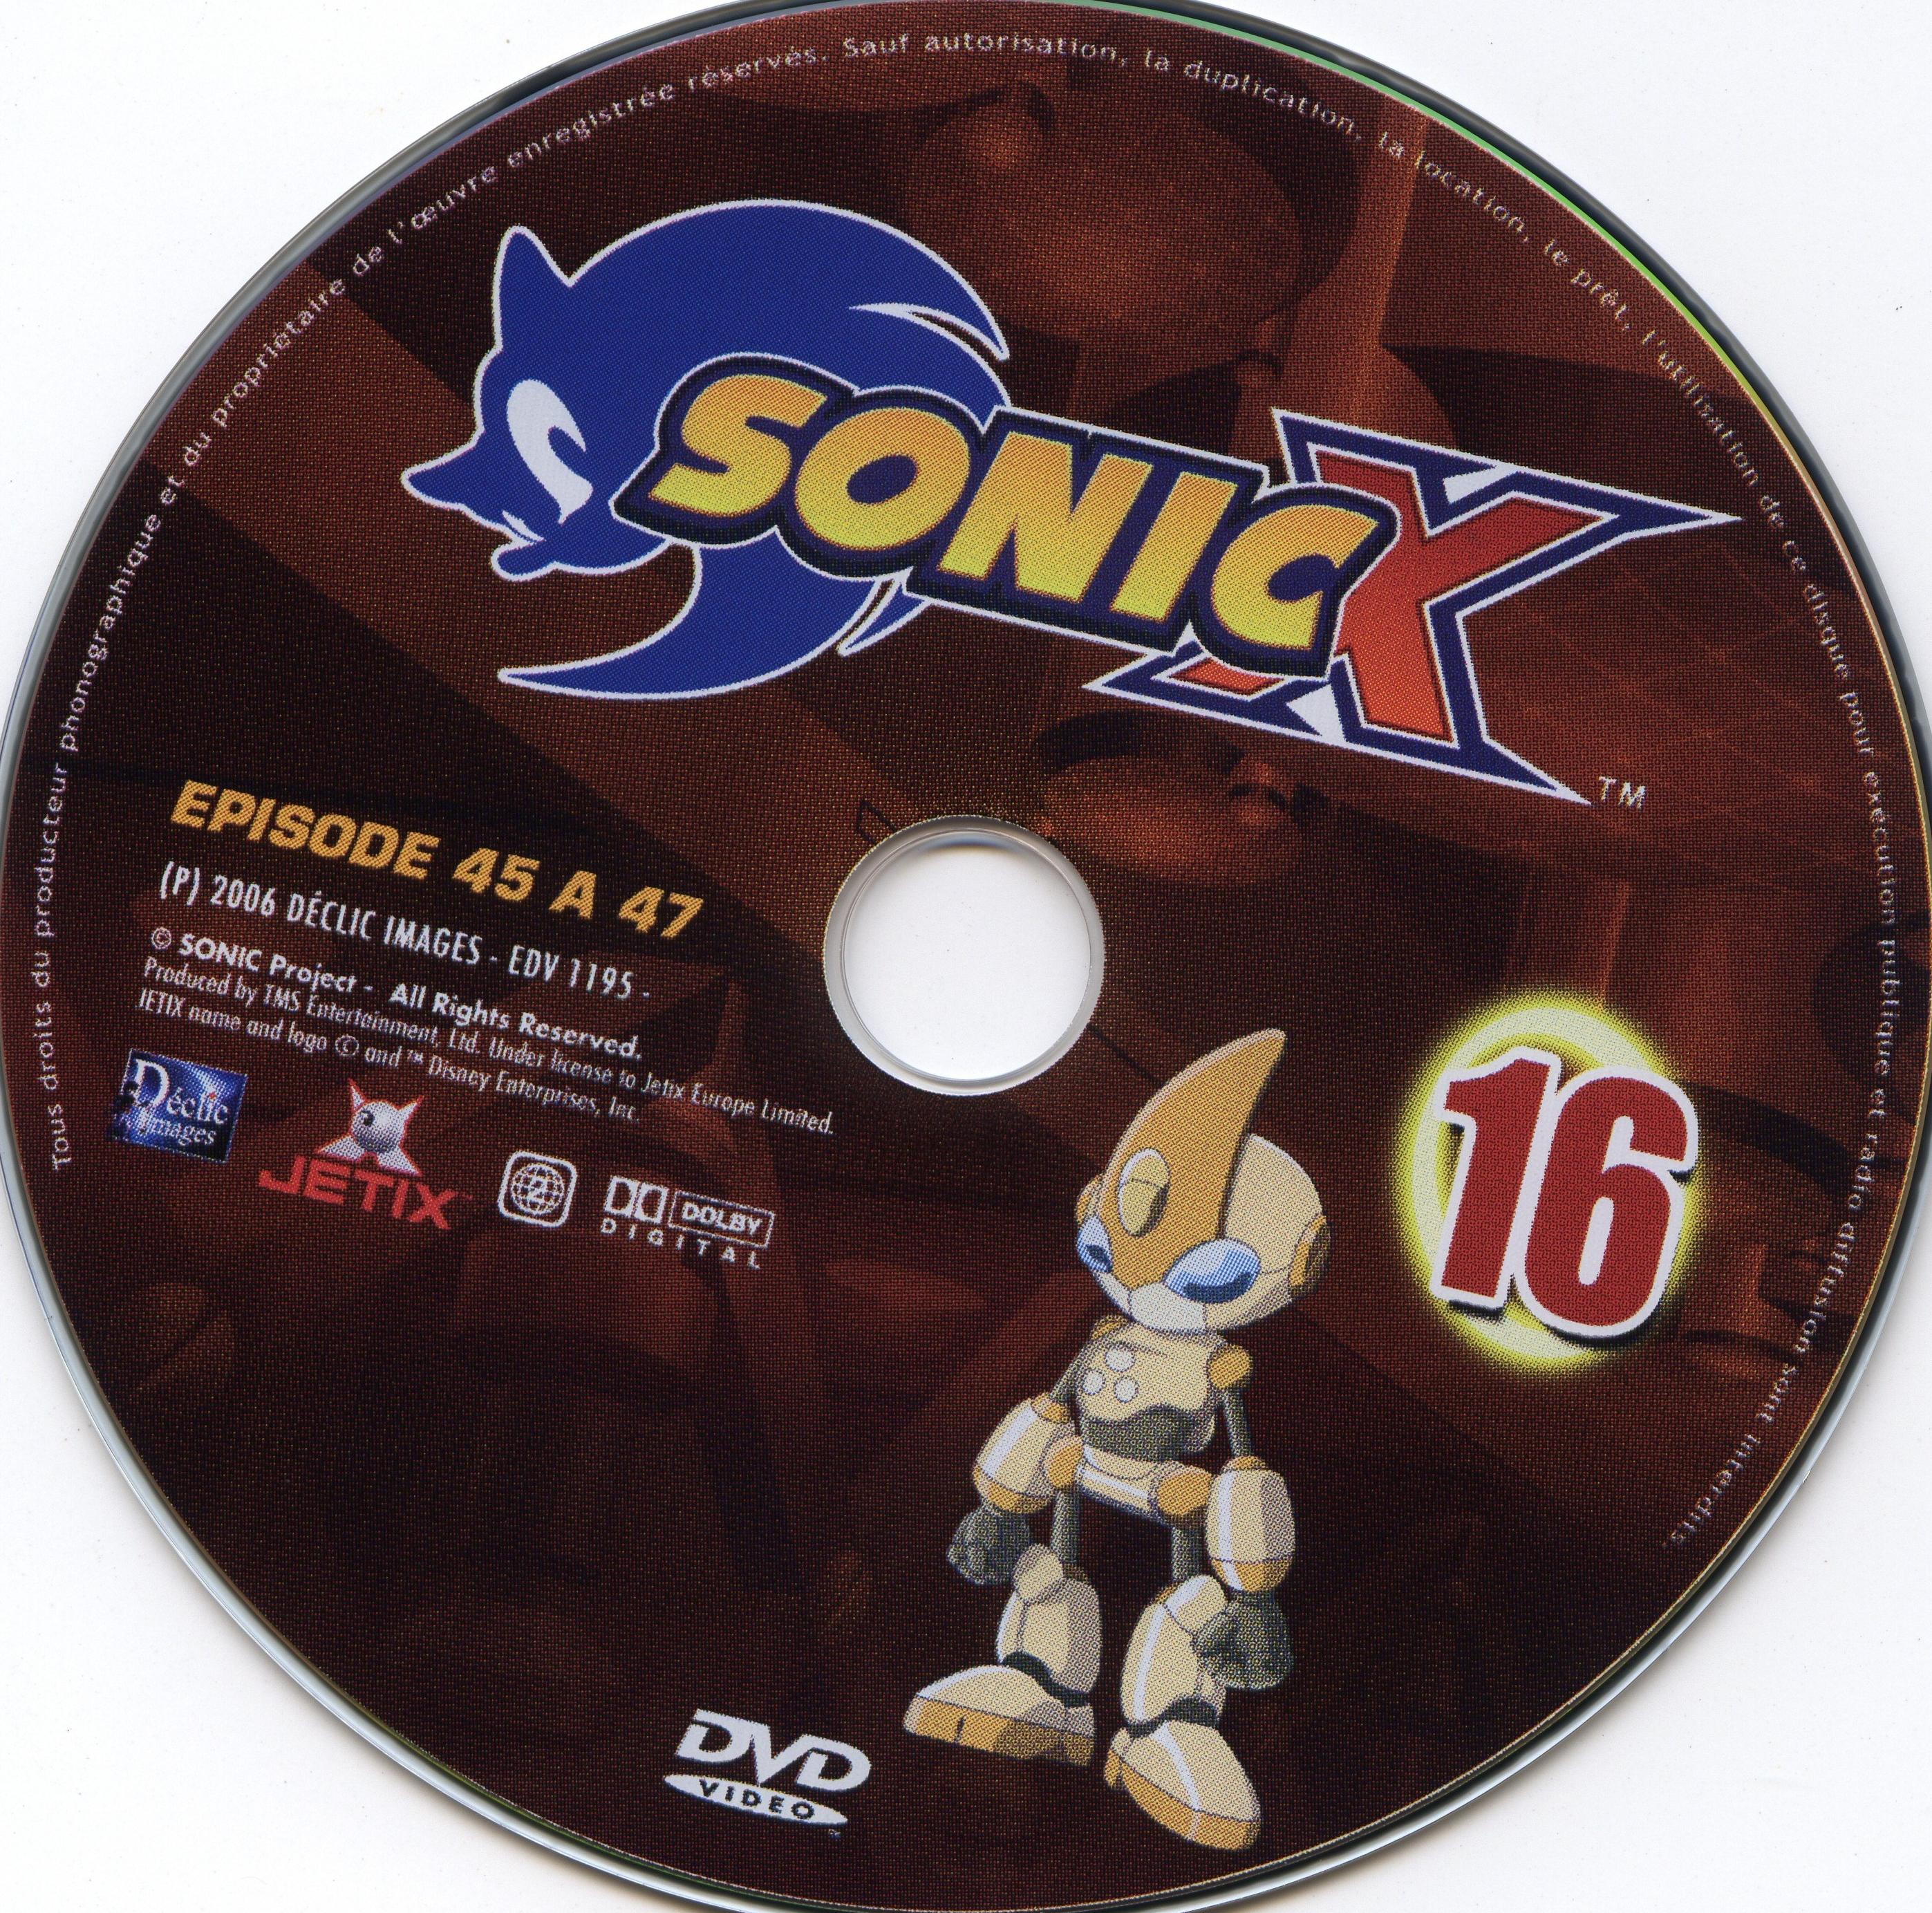 Sonic X vol 16